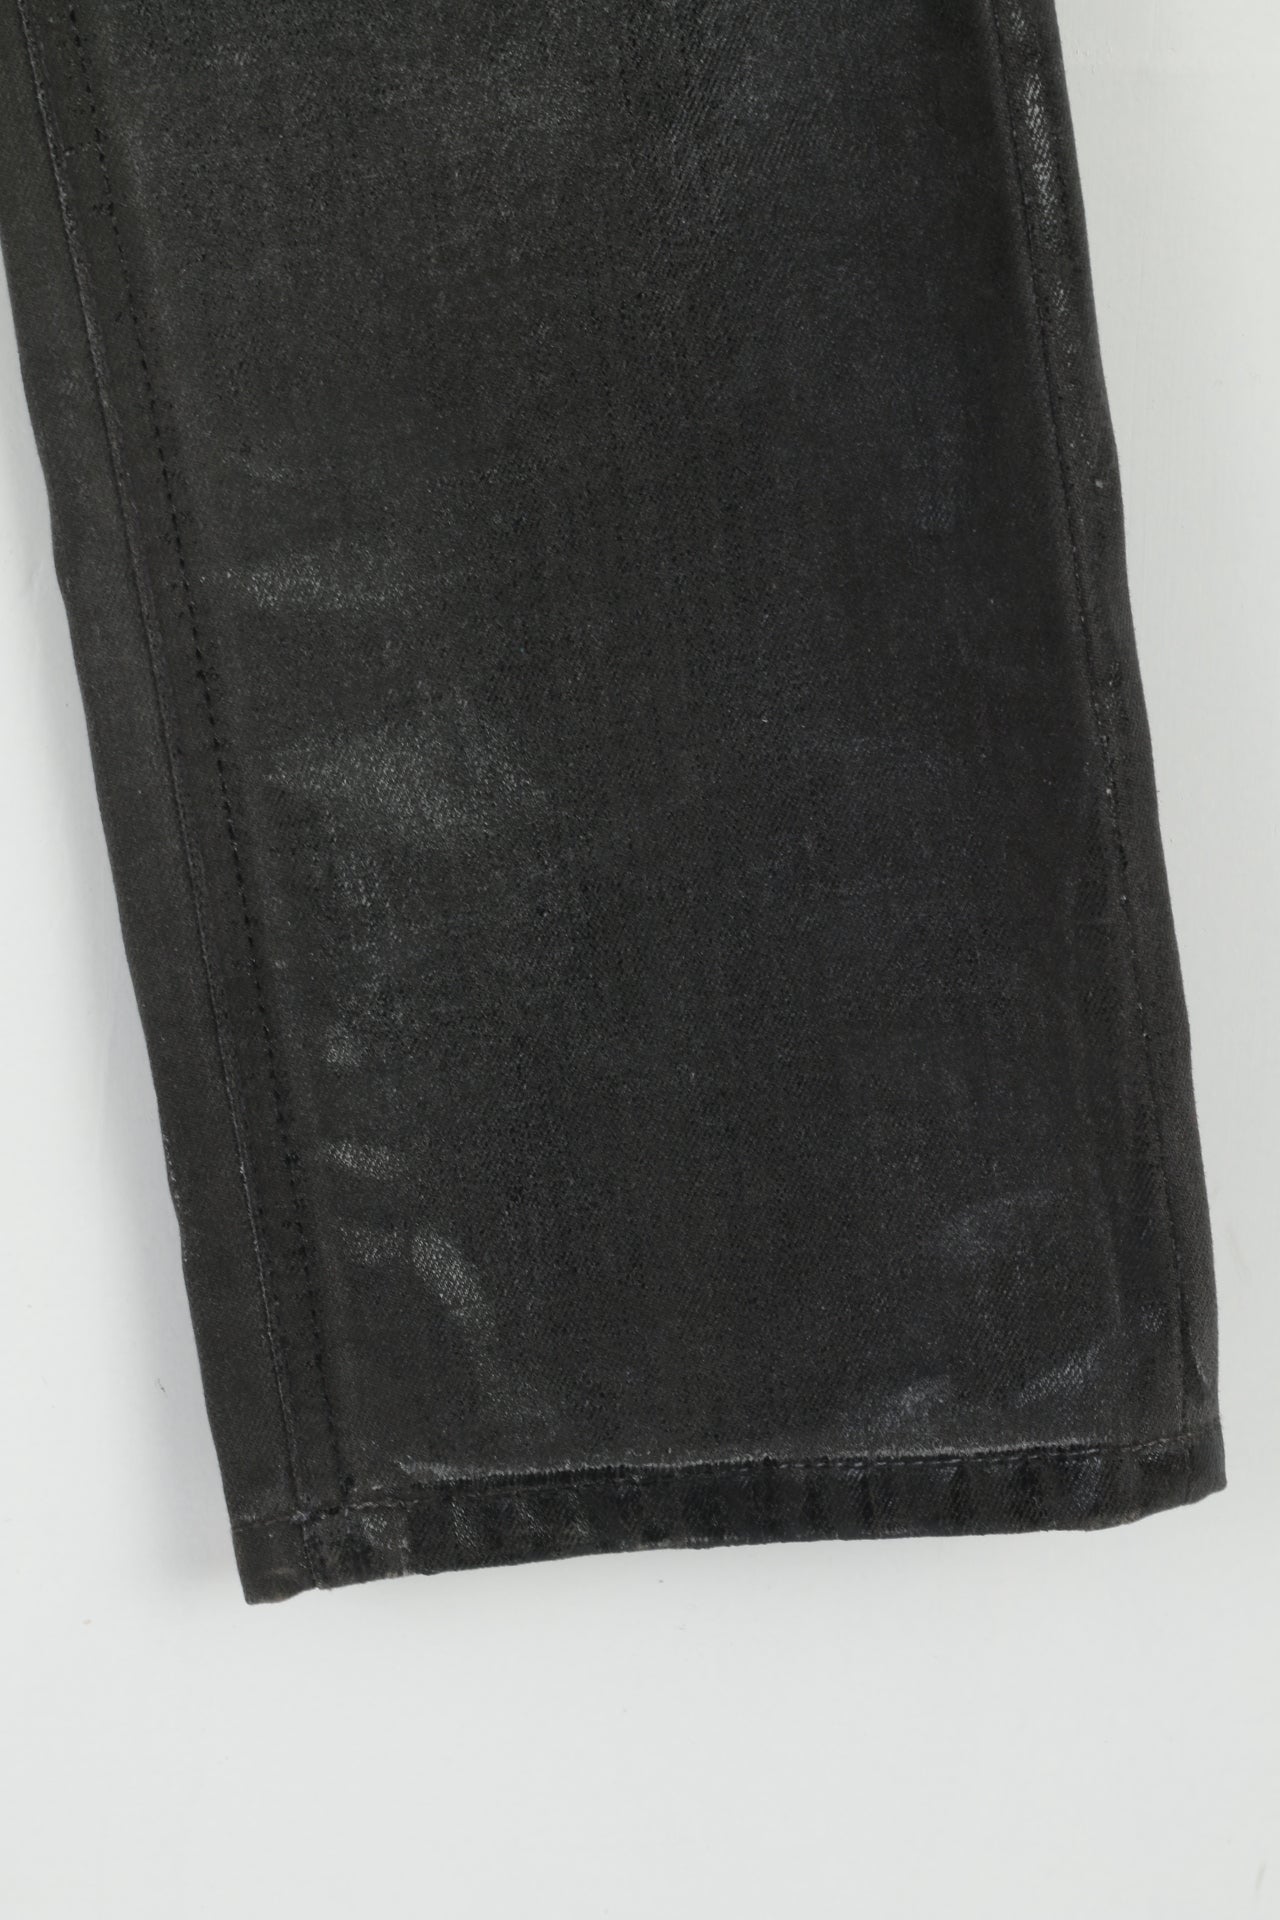 New Faith Women 30 Trousers Black Shiny Jean Cobain Icedenim Cotton Gothic Pants